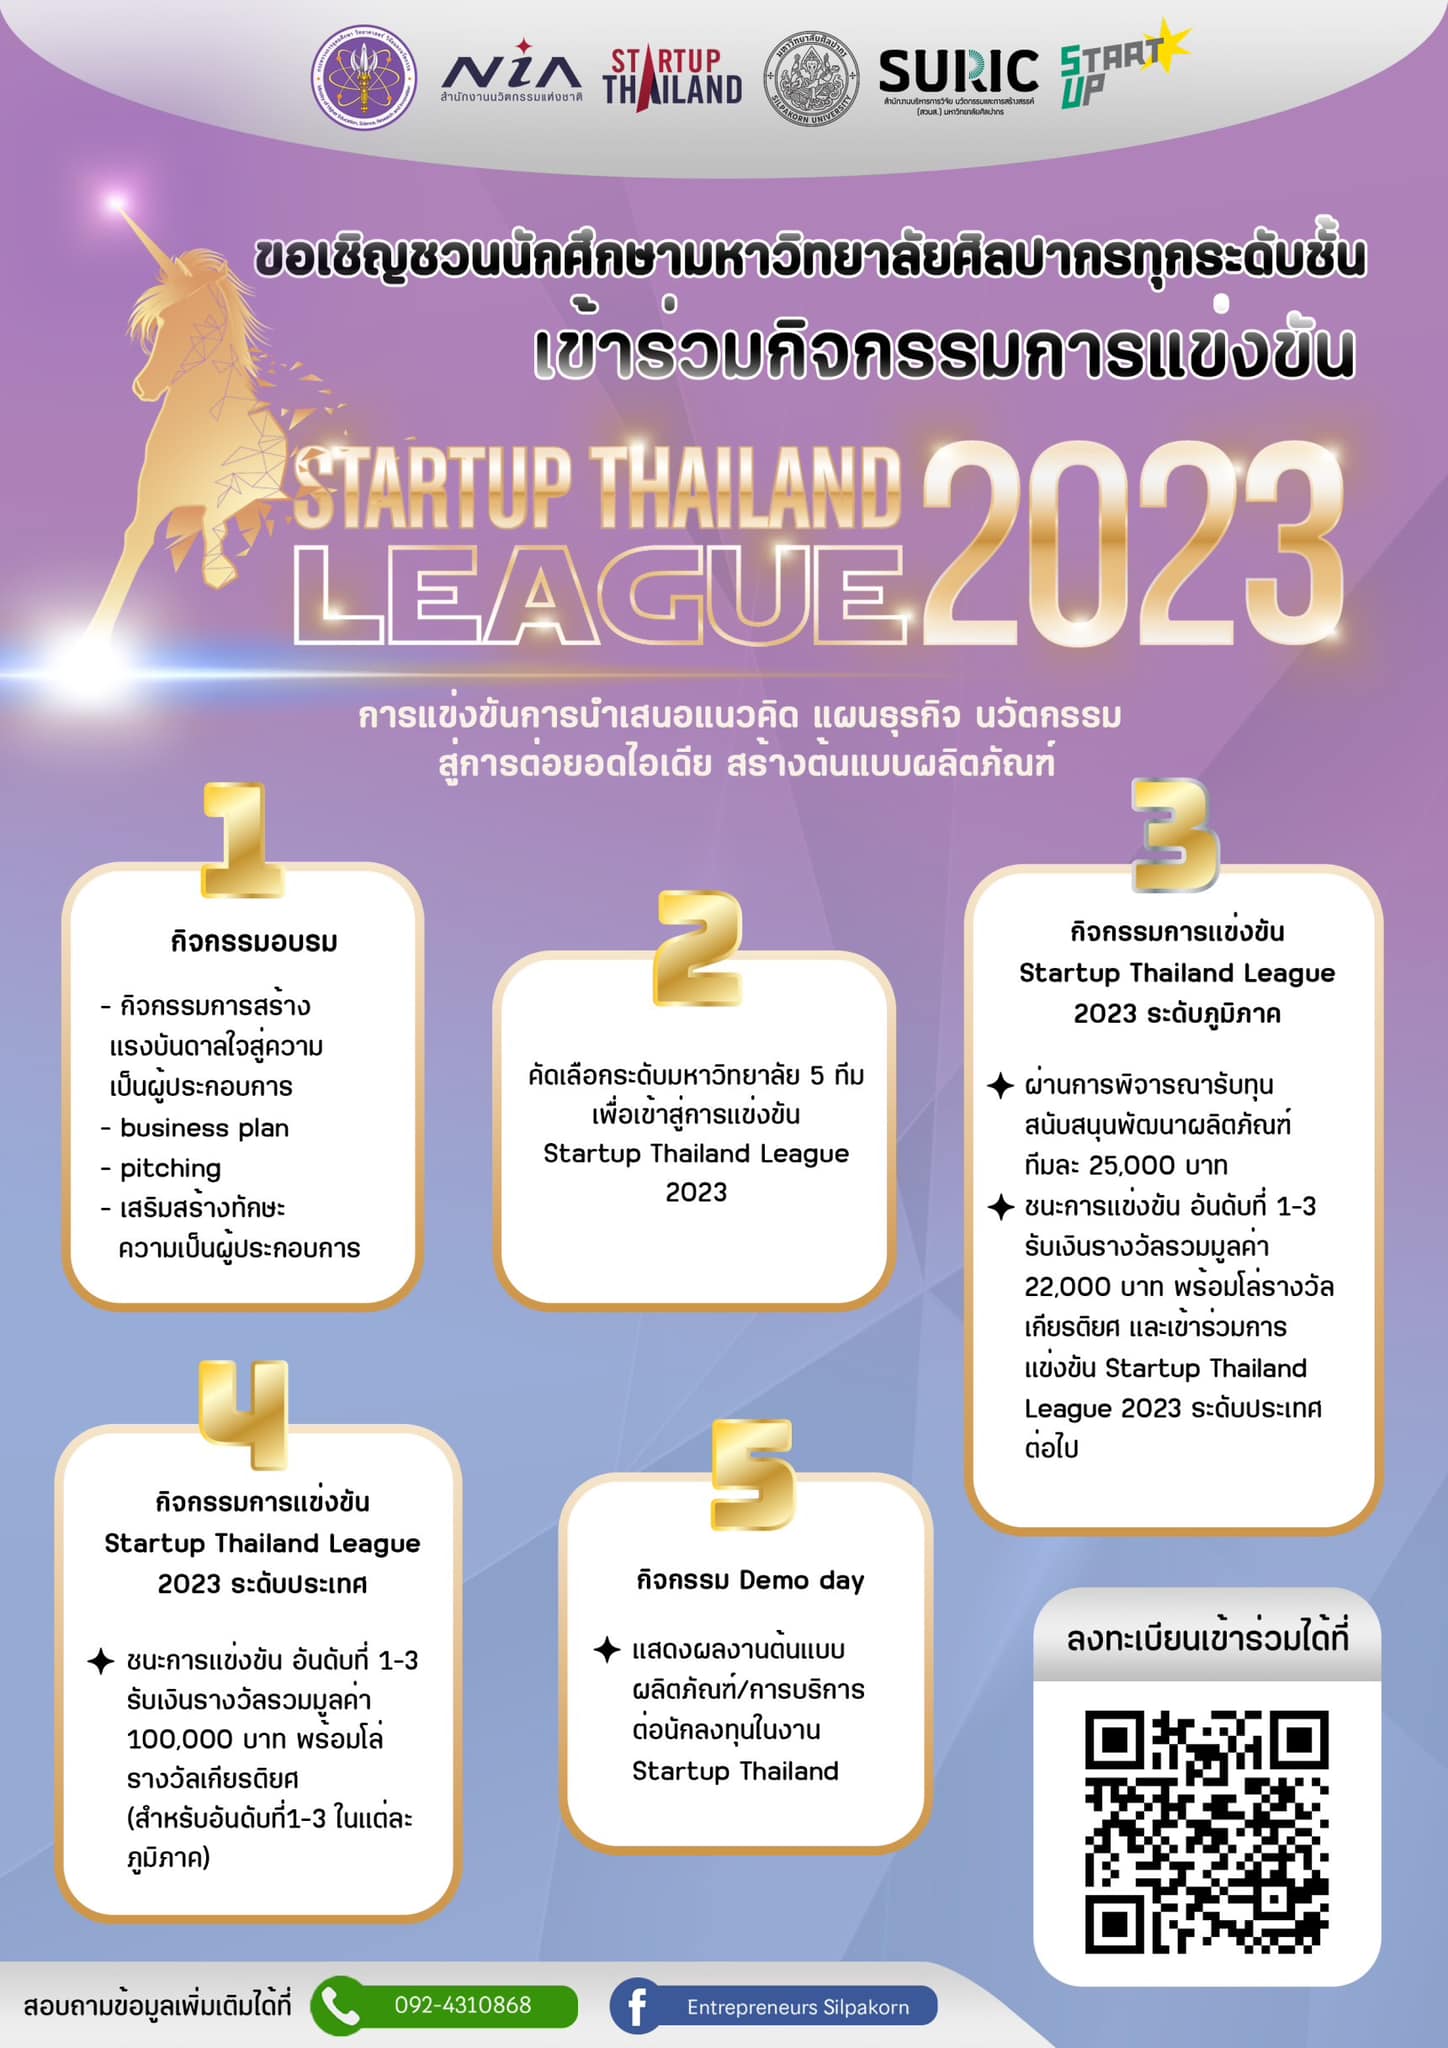 Startup Thailand League 2023